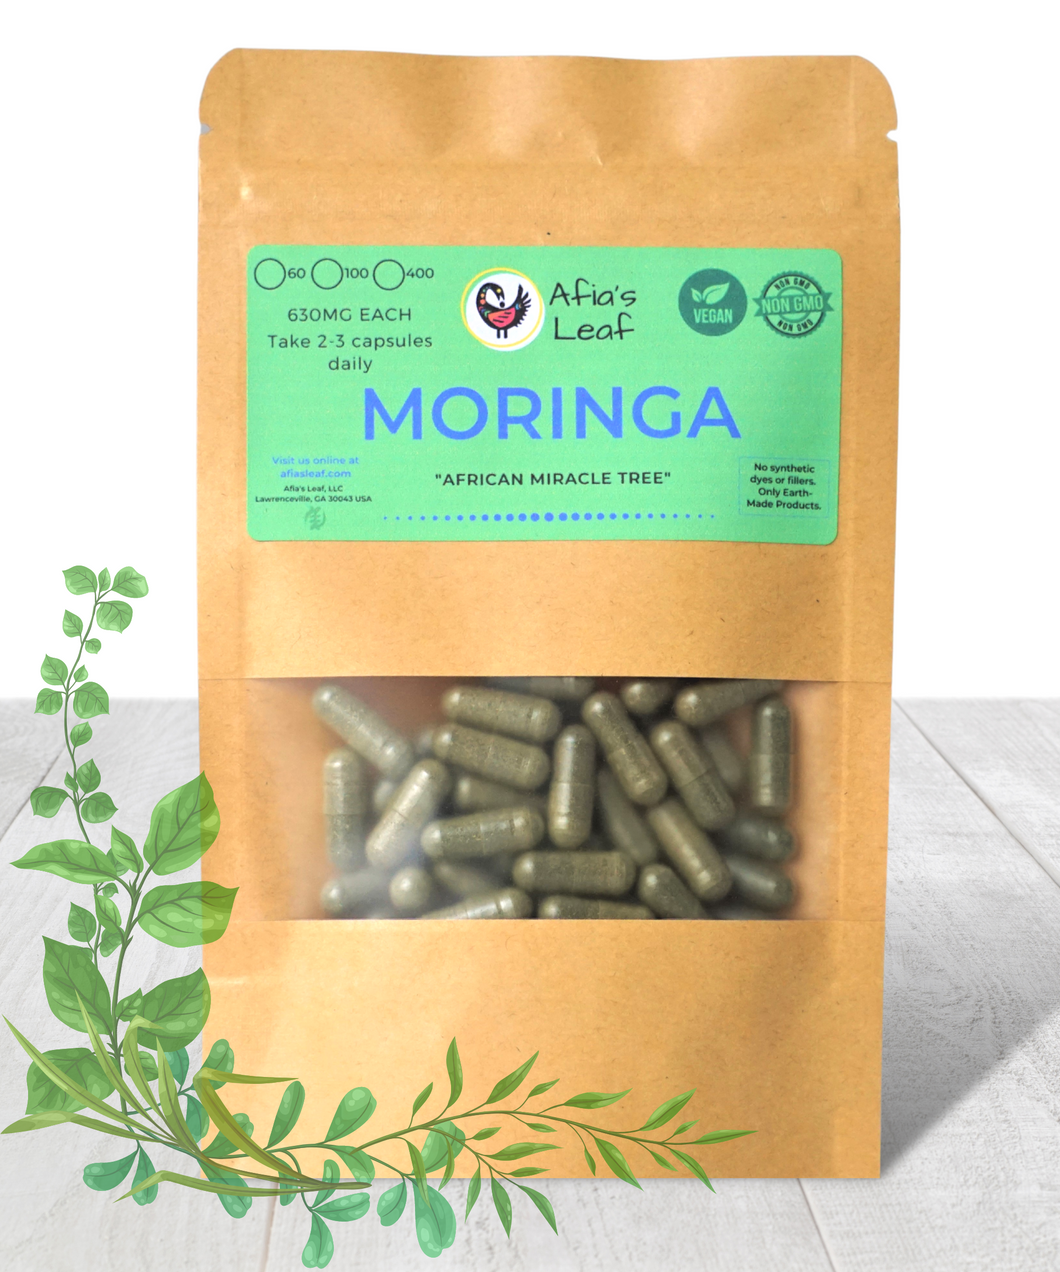 Moringa Superfood Supplement